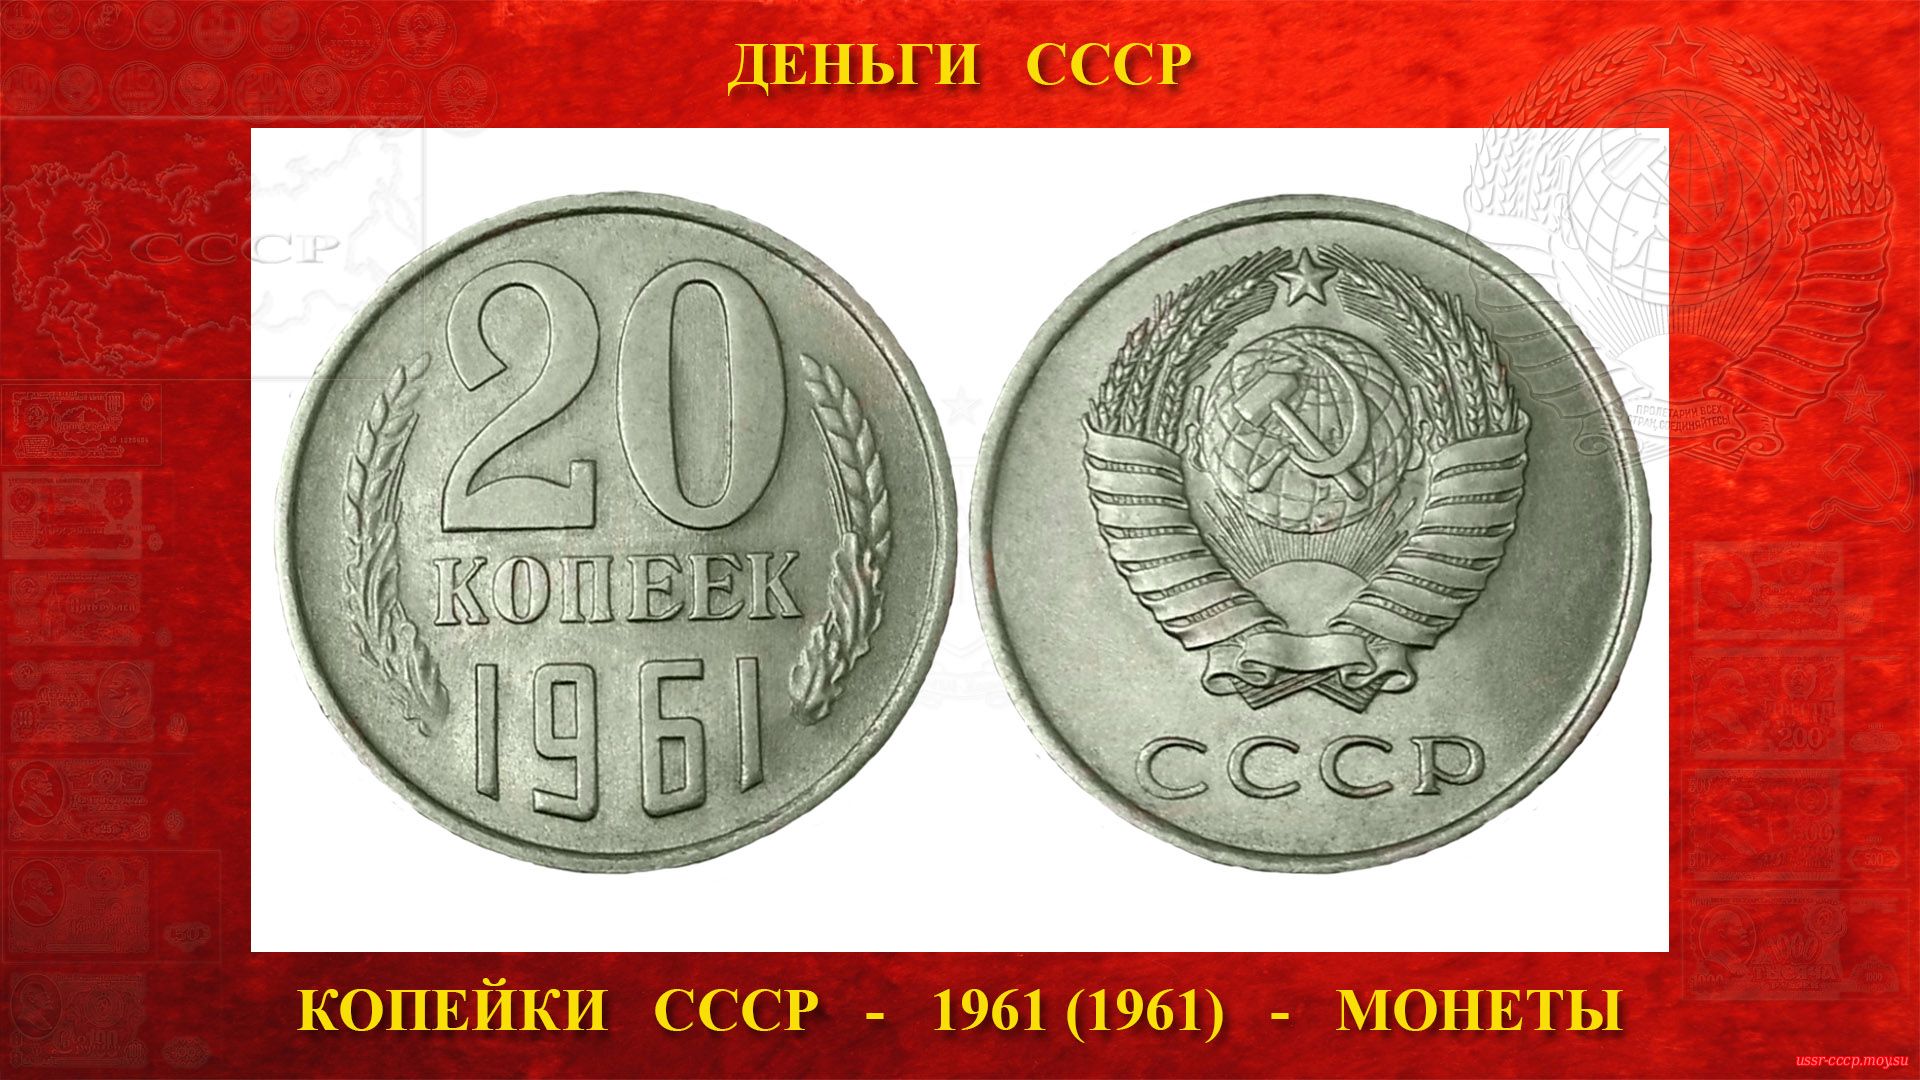 20 копейки 1961 года цена ссср. Монеты СССР 20 коп 1961. Монета СССР 20 копеек 1961 год. Монета СССР 20 копеек. Ценные монеты СССР 1961 20 копеек.